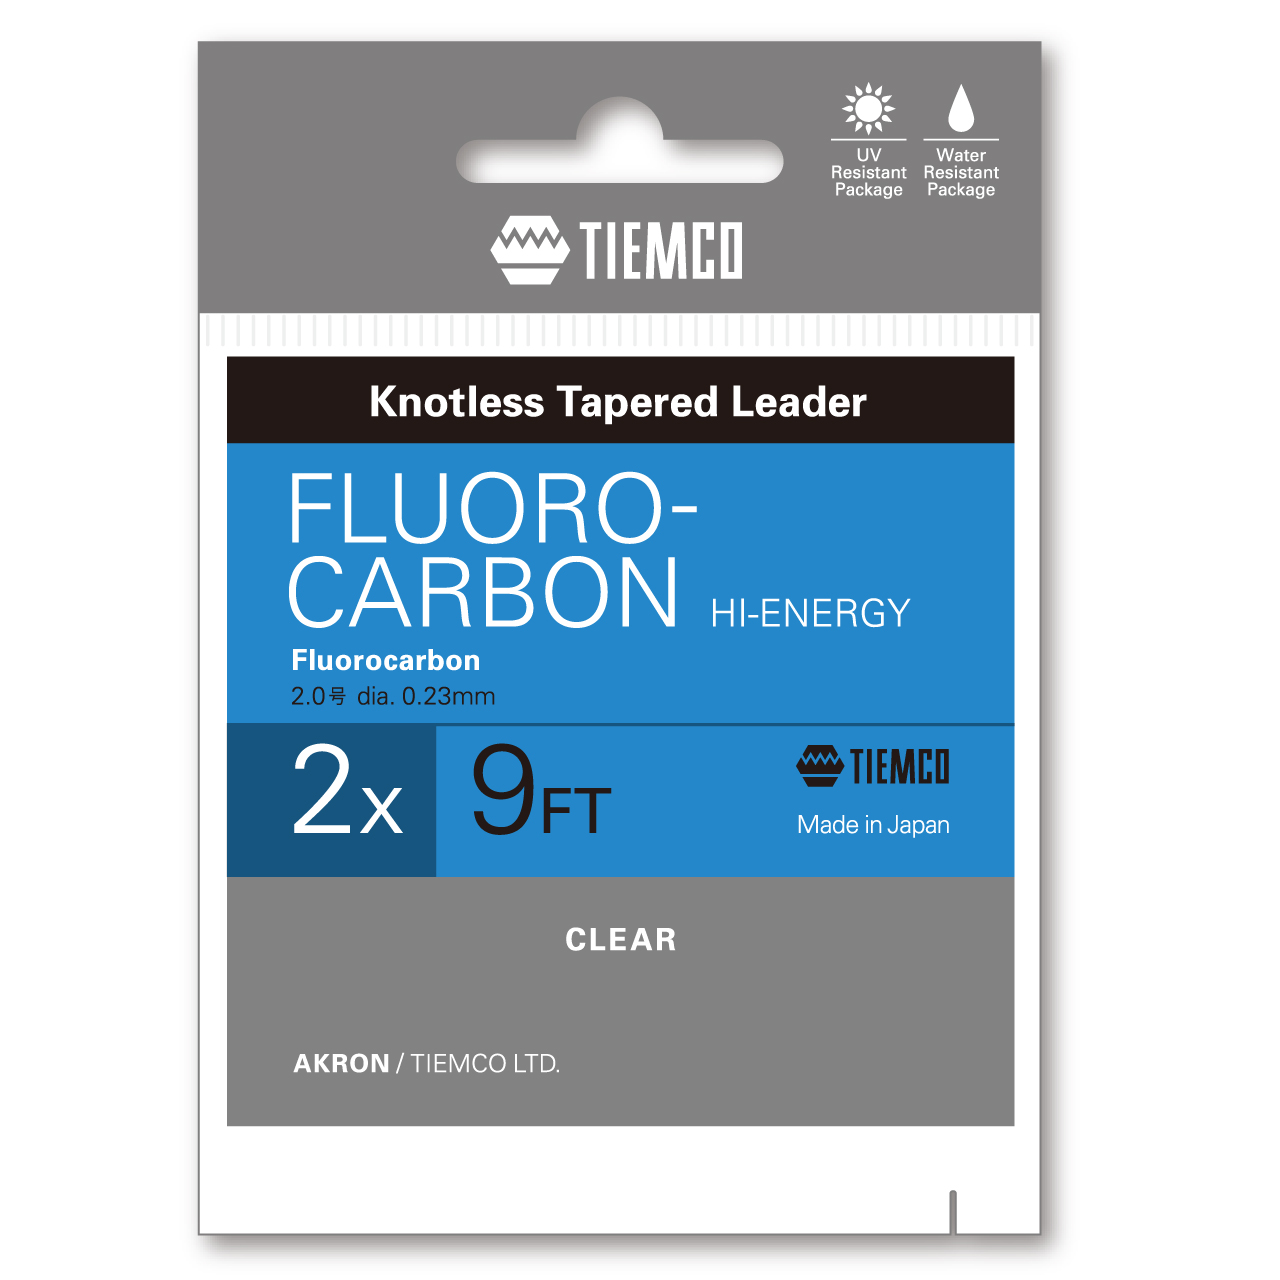 TIEMCO TIEMCO Fluorocarbon HI-ENERGY Leader